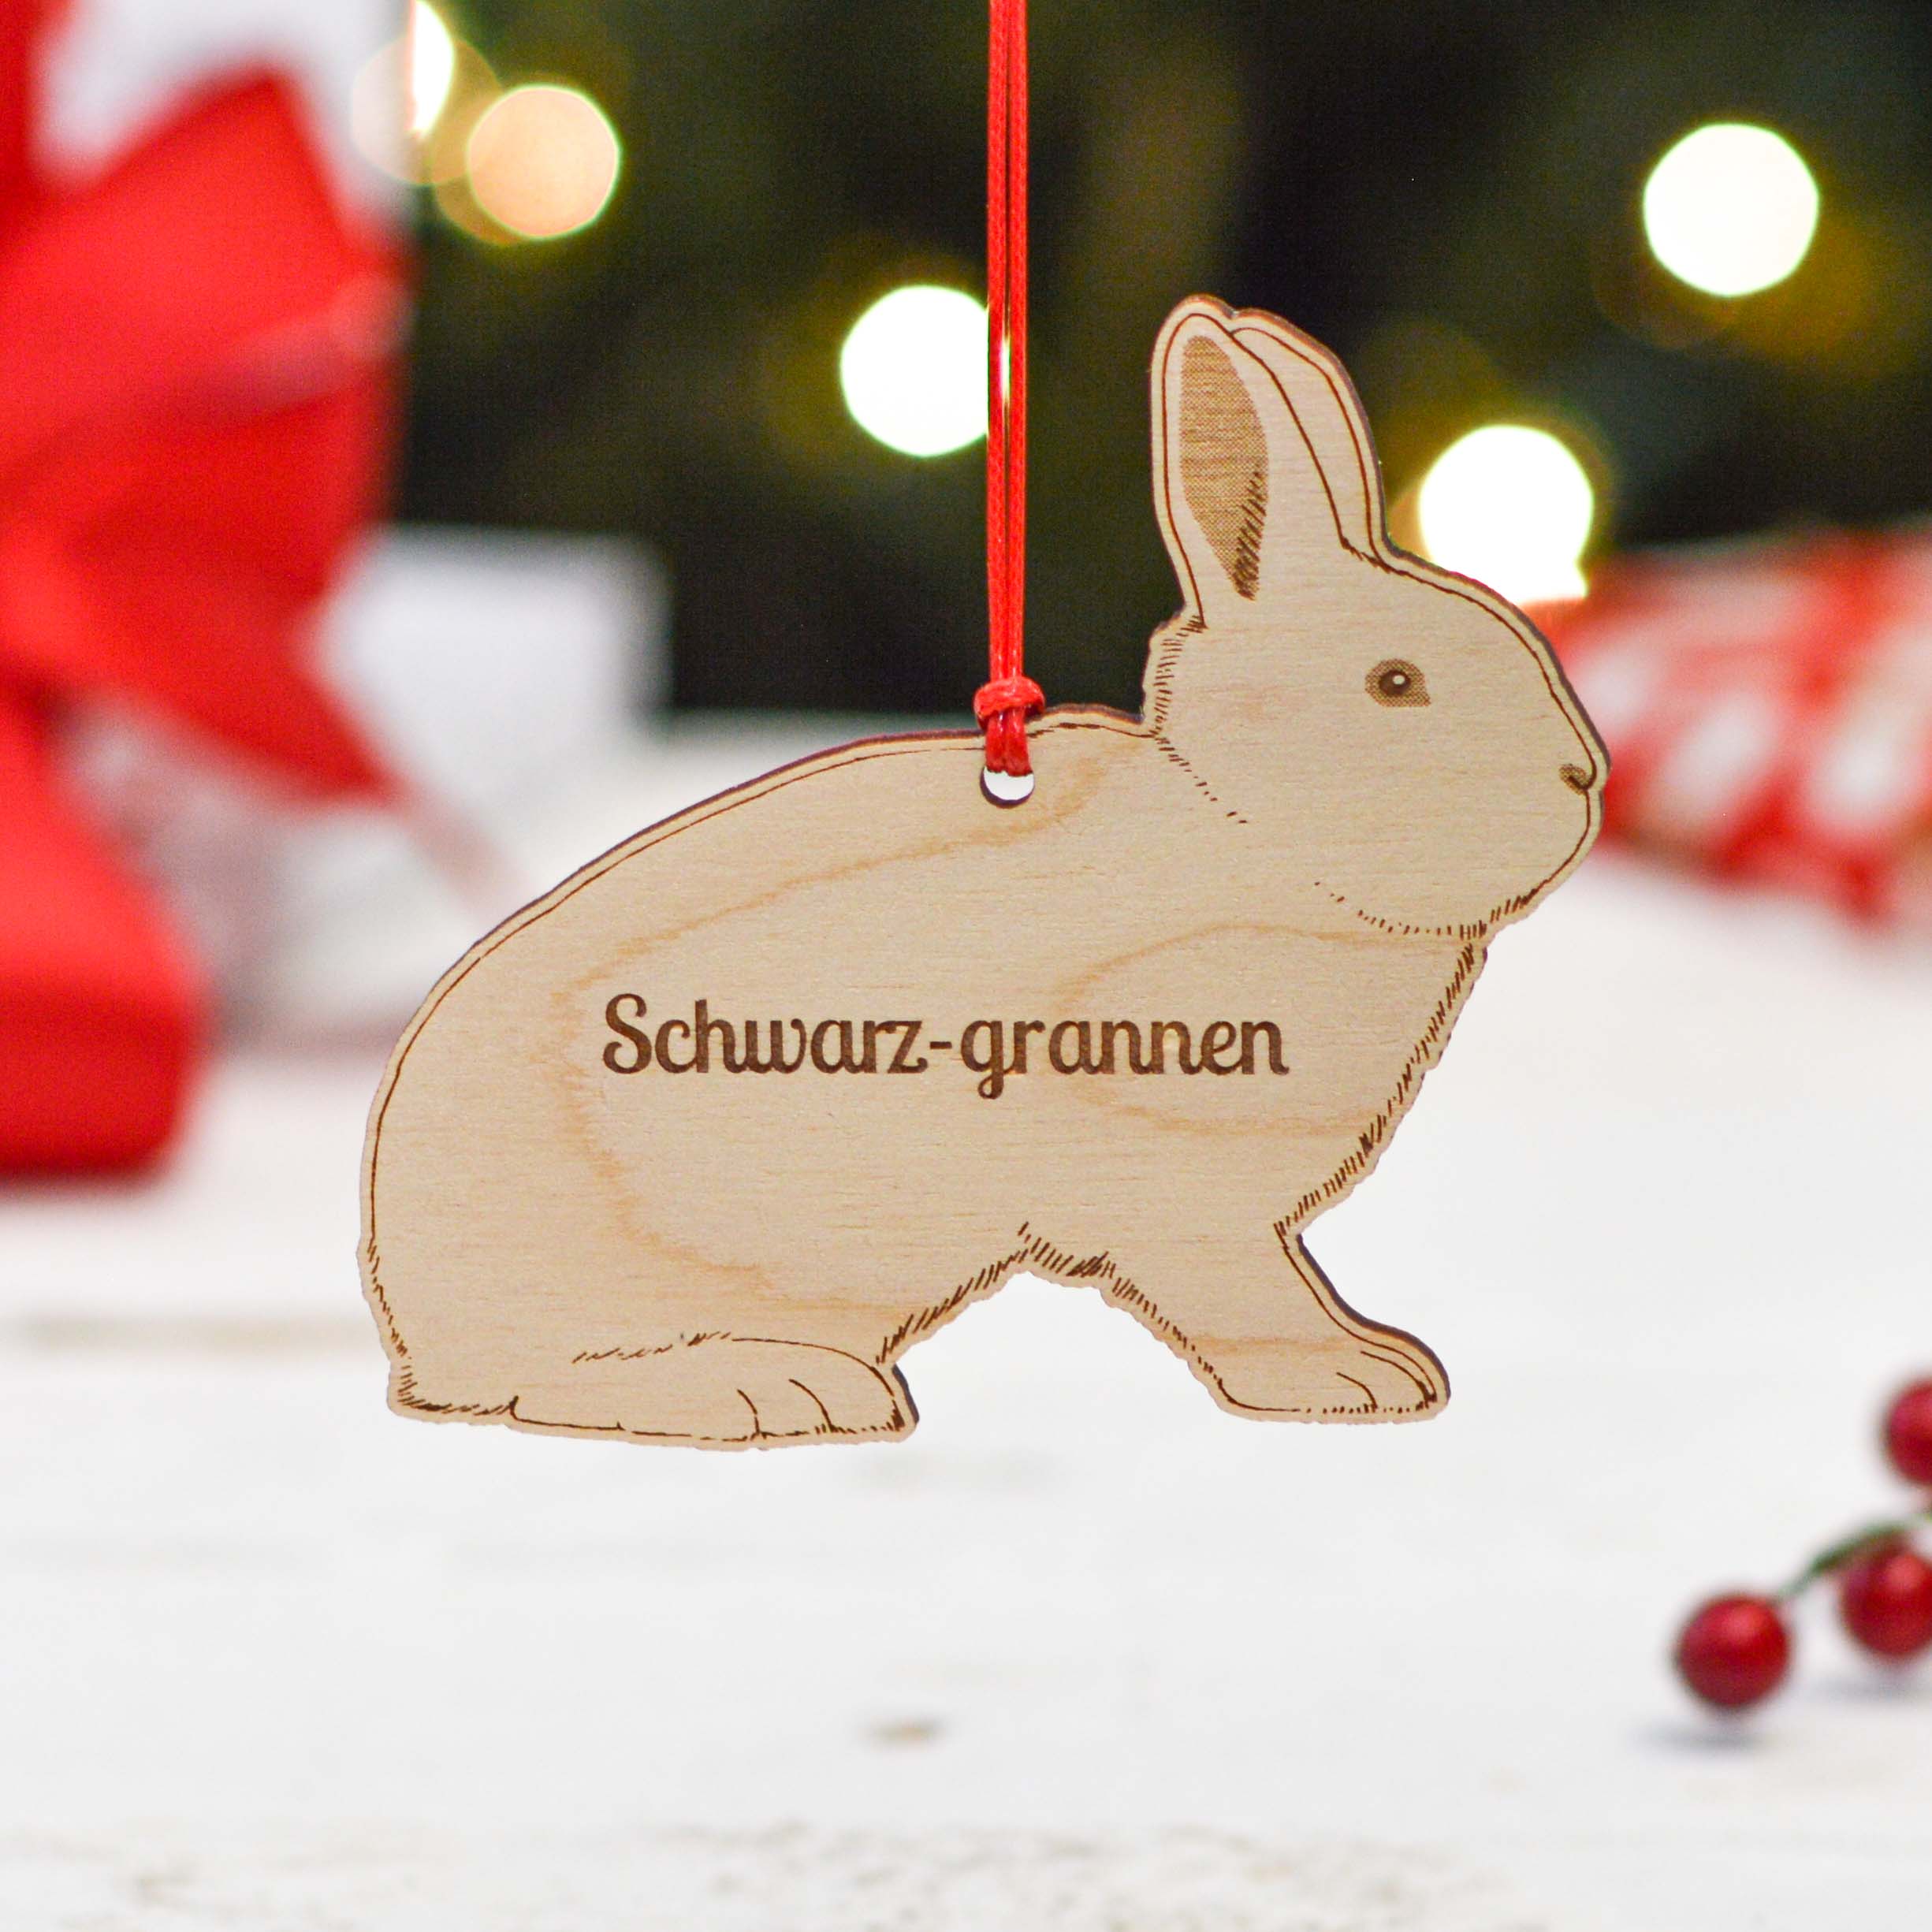 Personalised Schwarzgrannen Rabbit Decoration